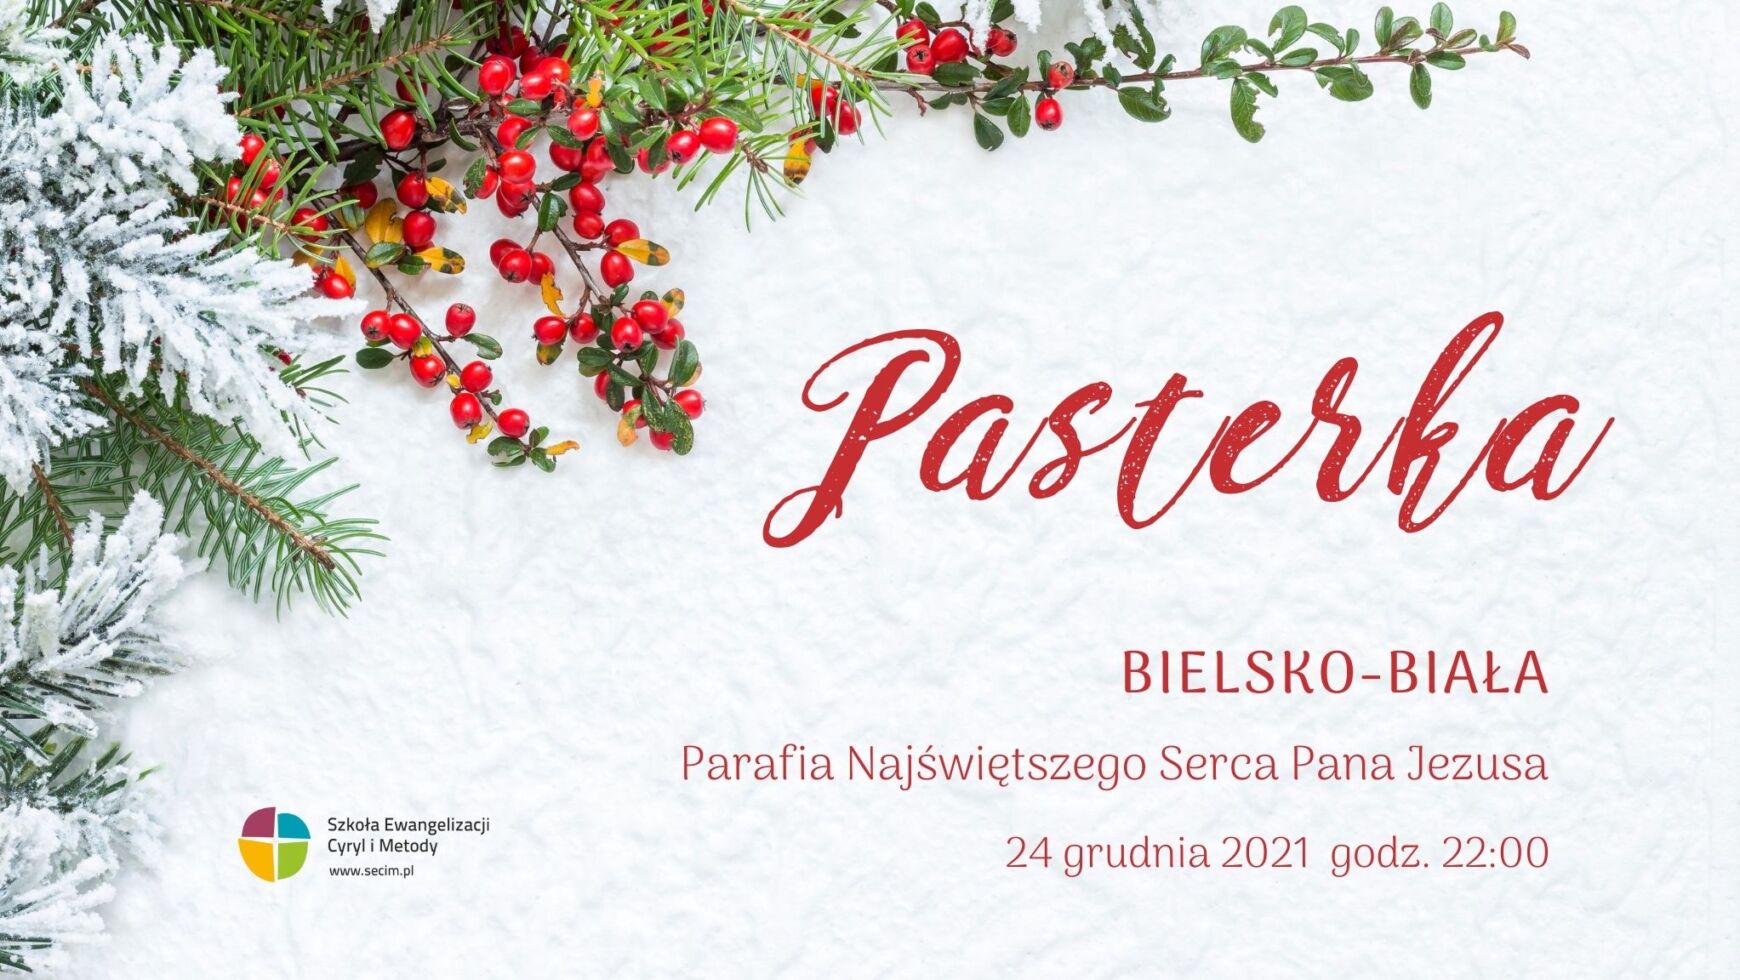 Pasterka, Bielsko-Biała 24.12.2021, godz. 22:00